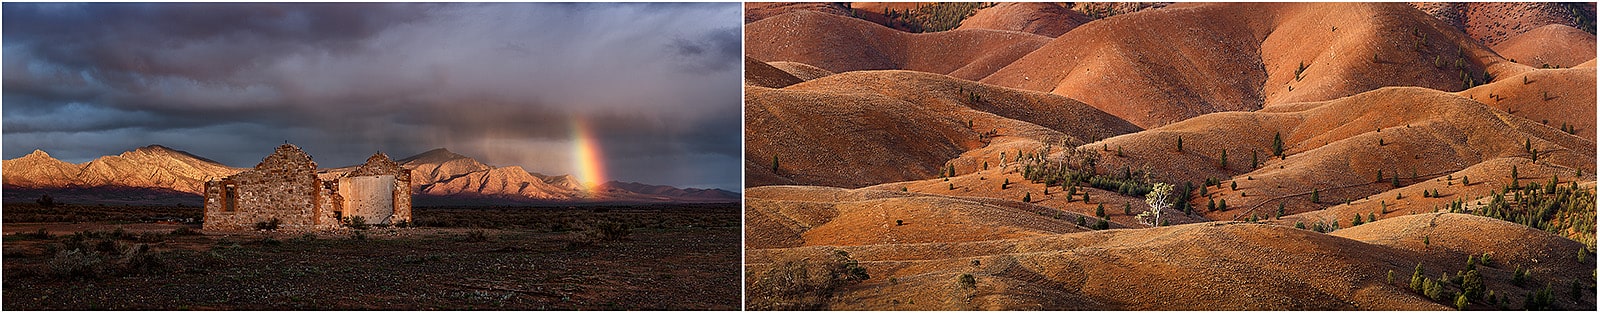 Flinders-Ranges-Photography-Tour-Image-01